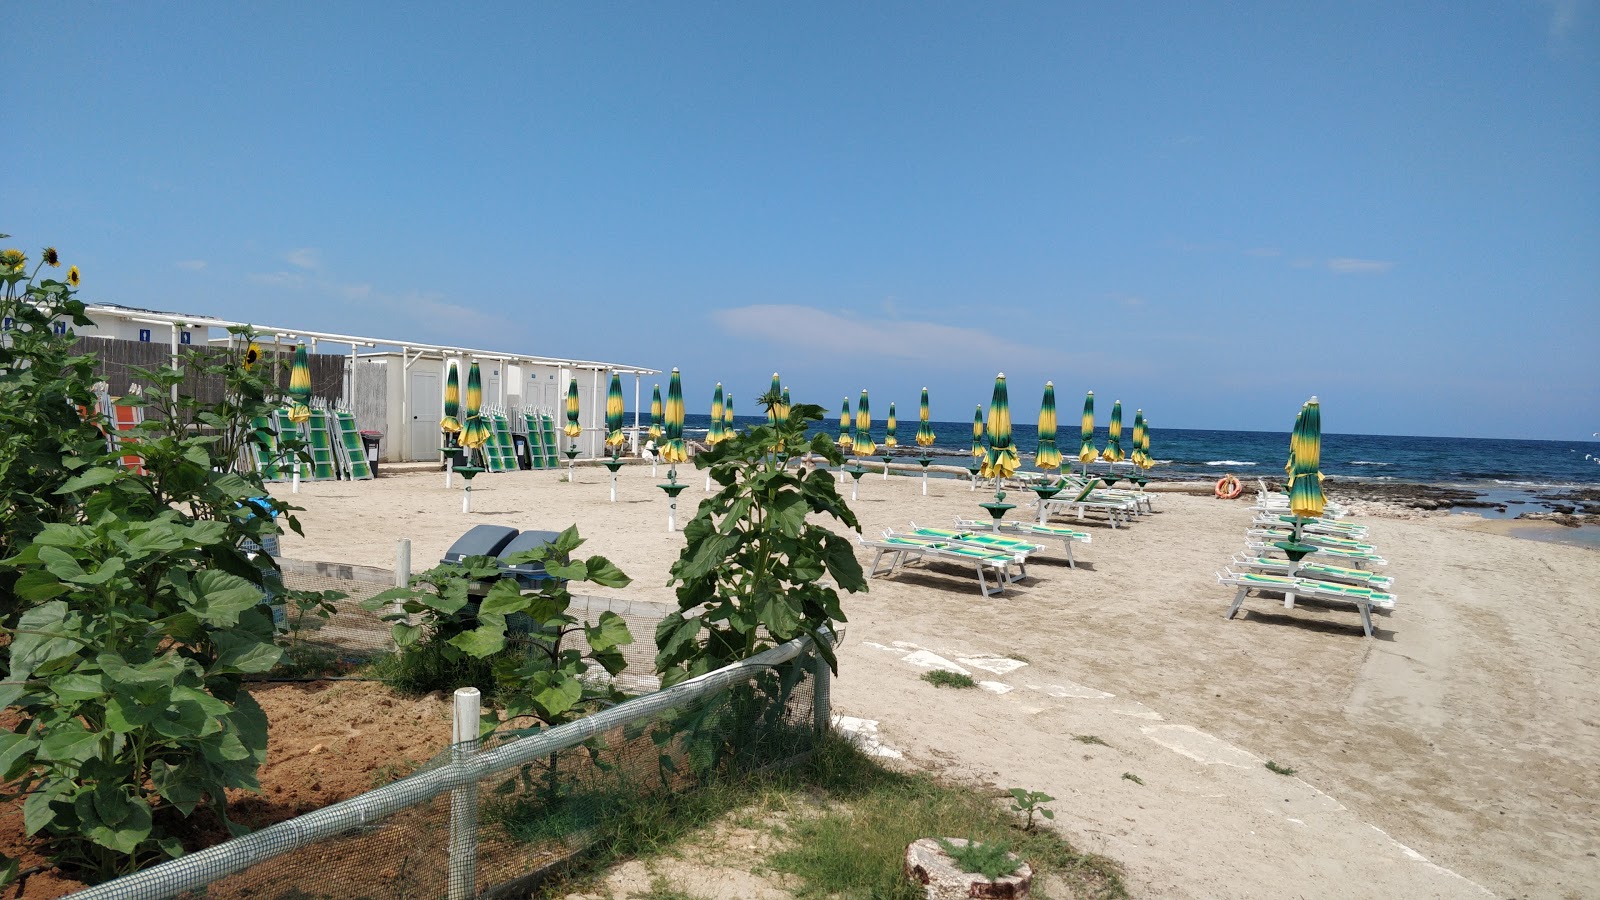 Foto af Spiaggia di Specchiolla med små multi -bugter